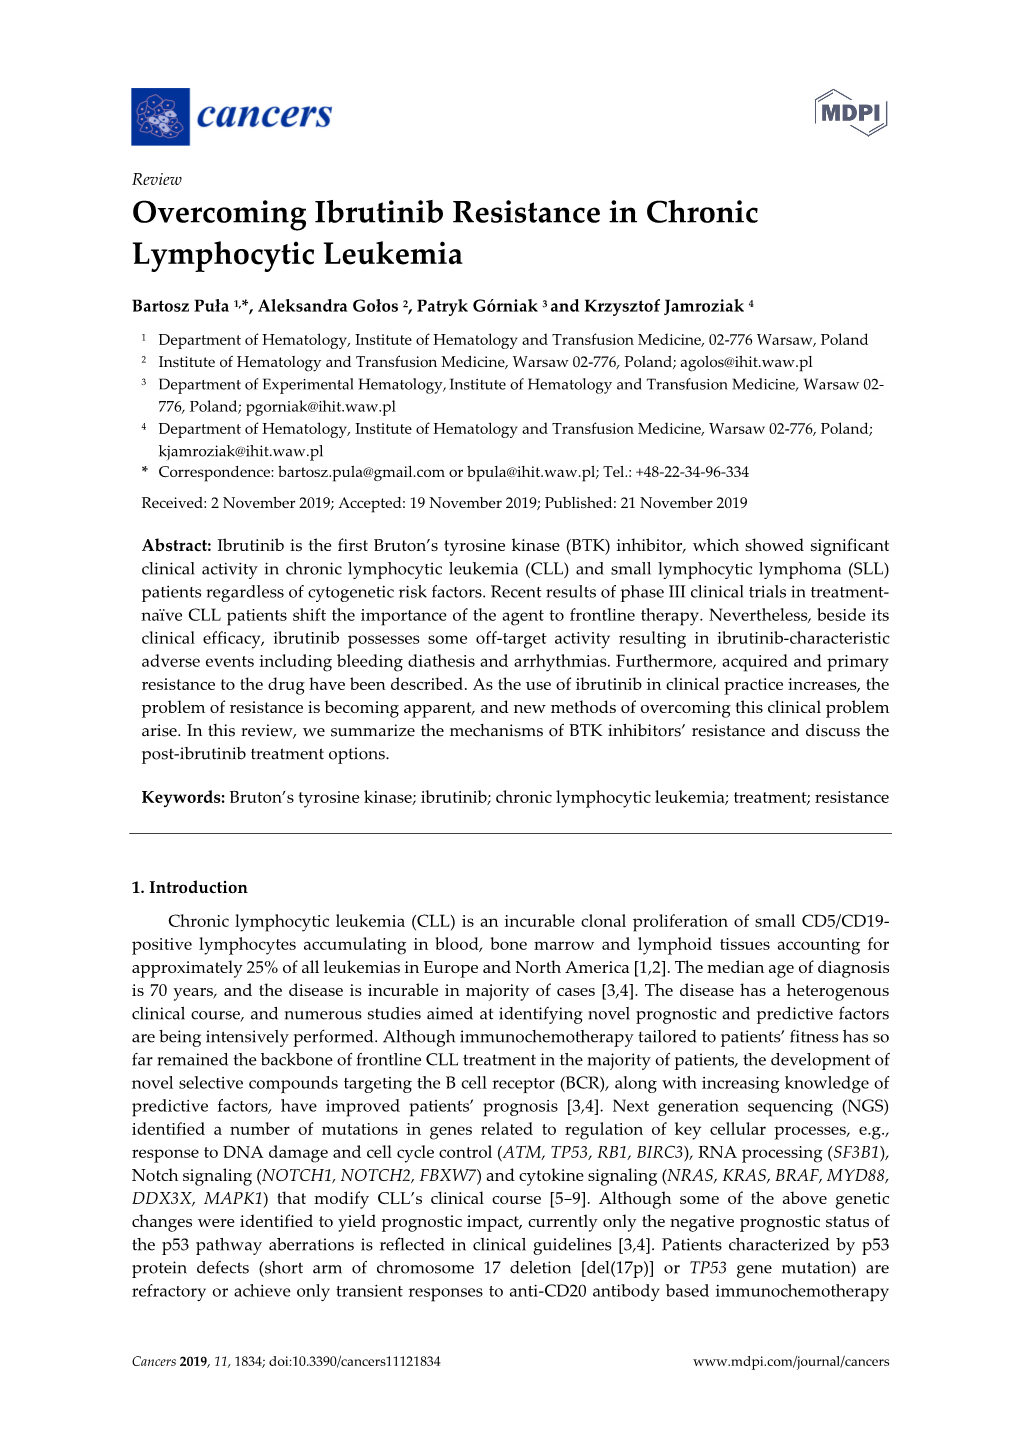 Overcoming Ibrutinib Resistance in Chronic Lymphocytic Leukemia